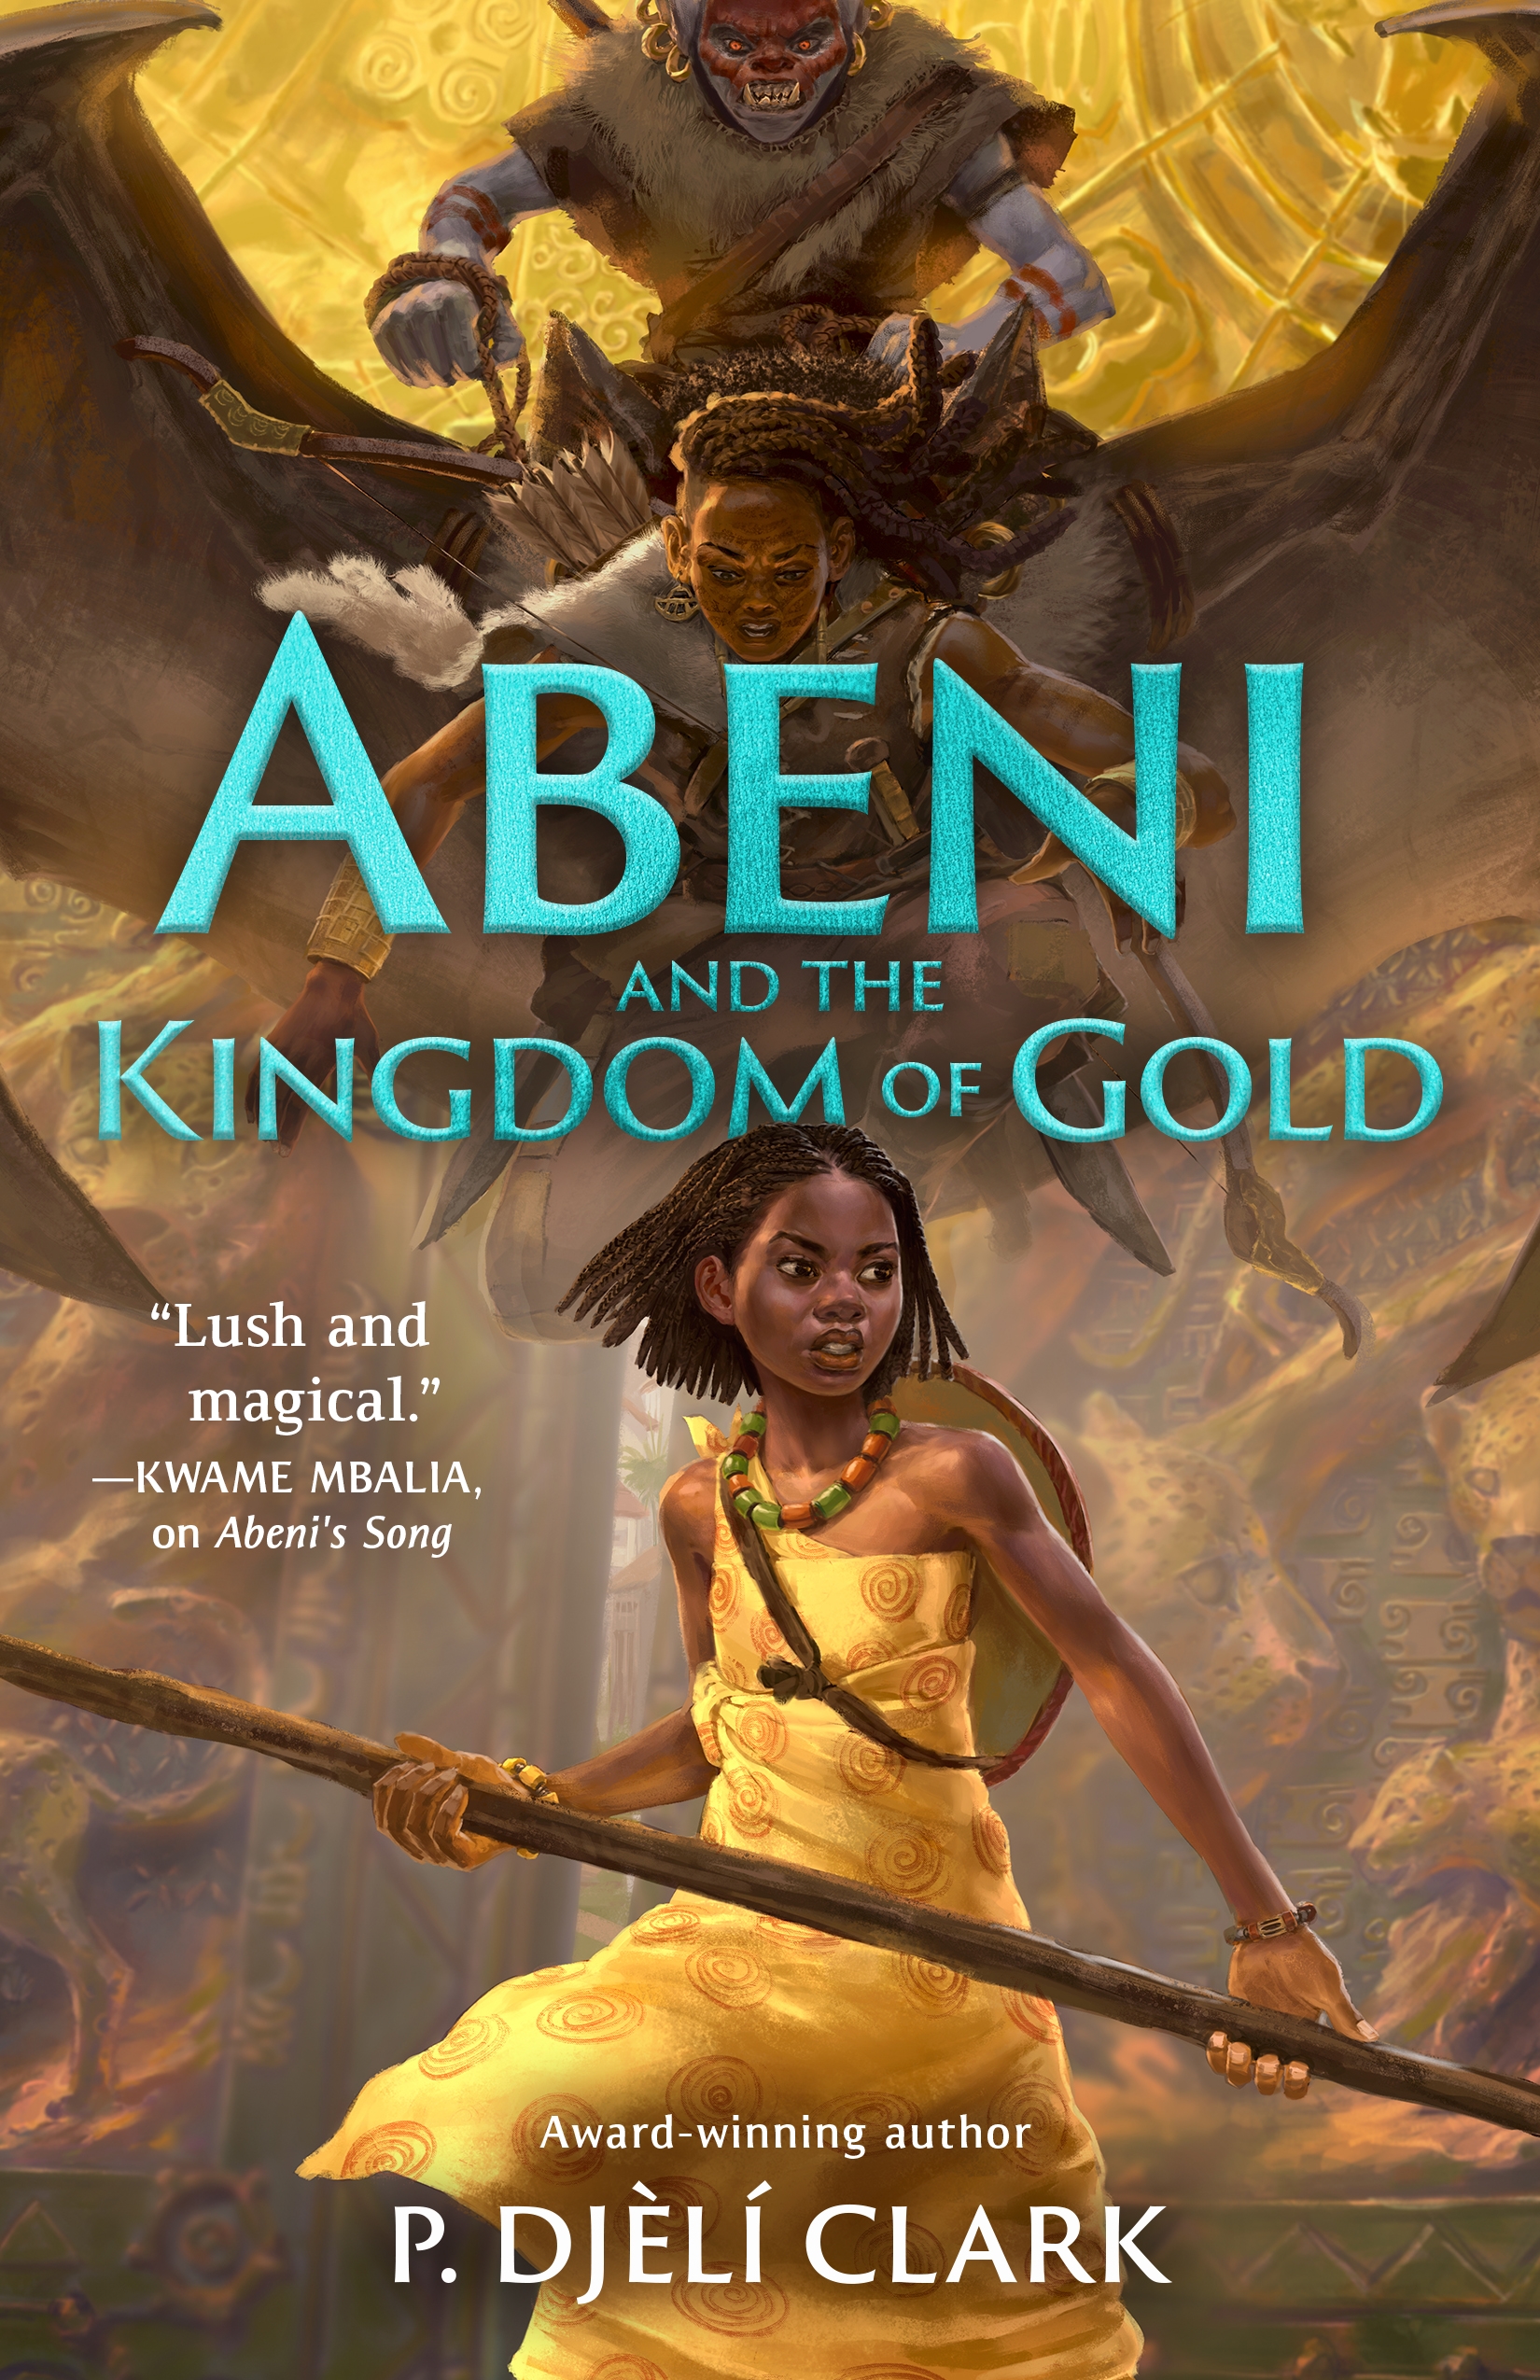 Abeni and the Kingdom of Gold by P. Djèlí Clark